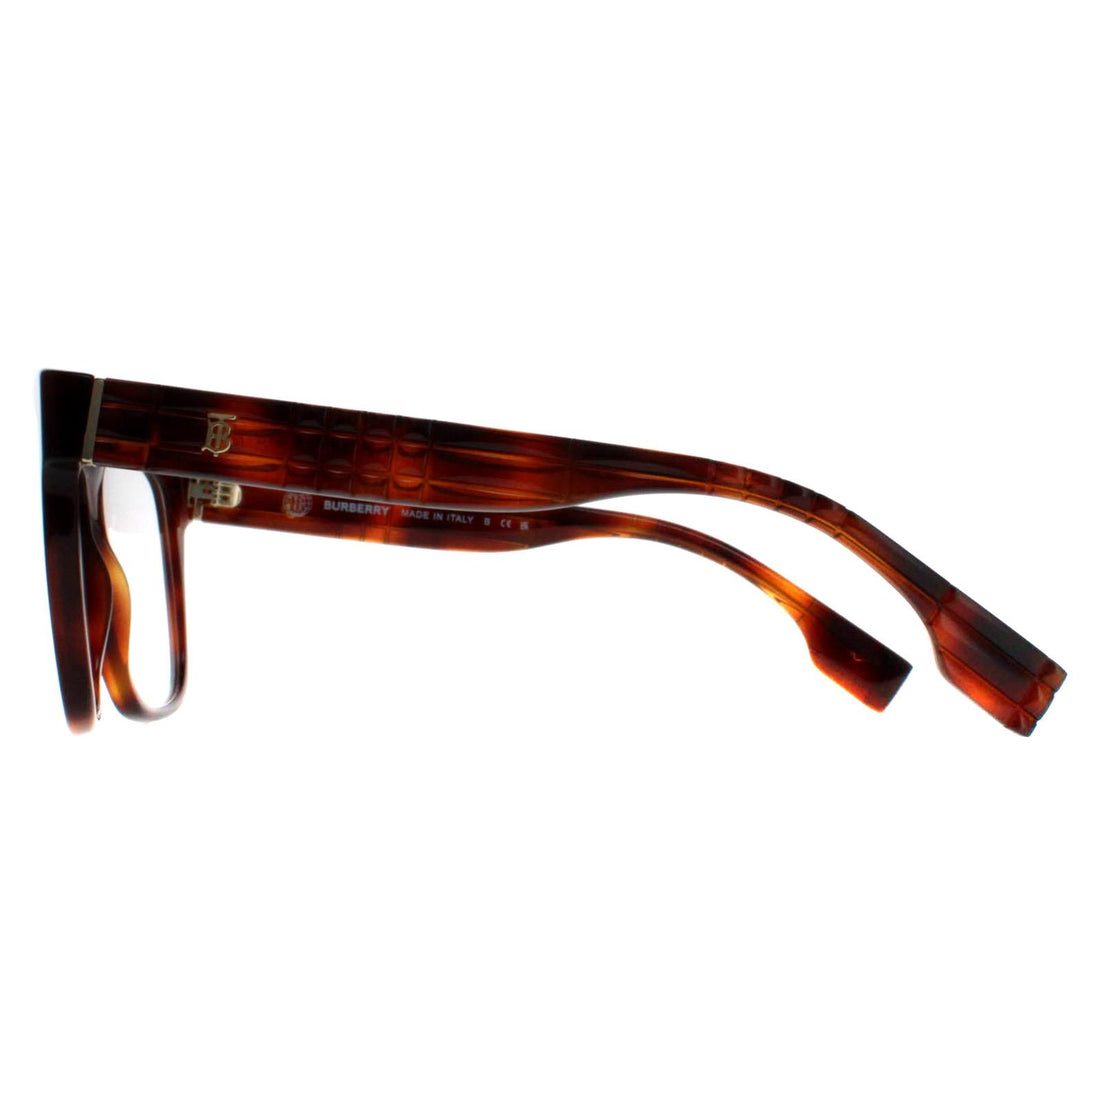 Burberry BE2363 Glasses Frames